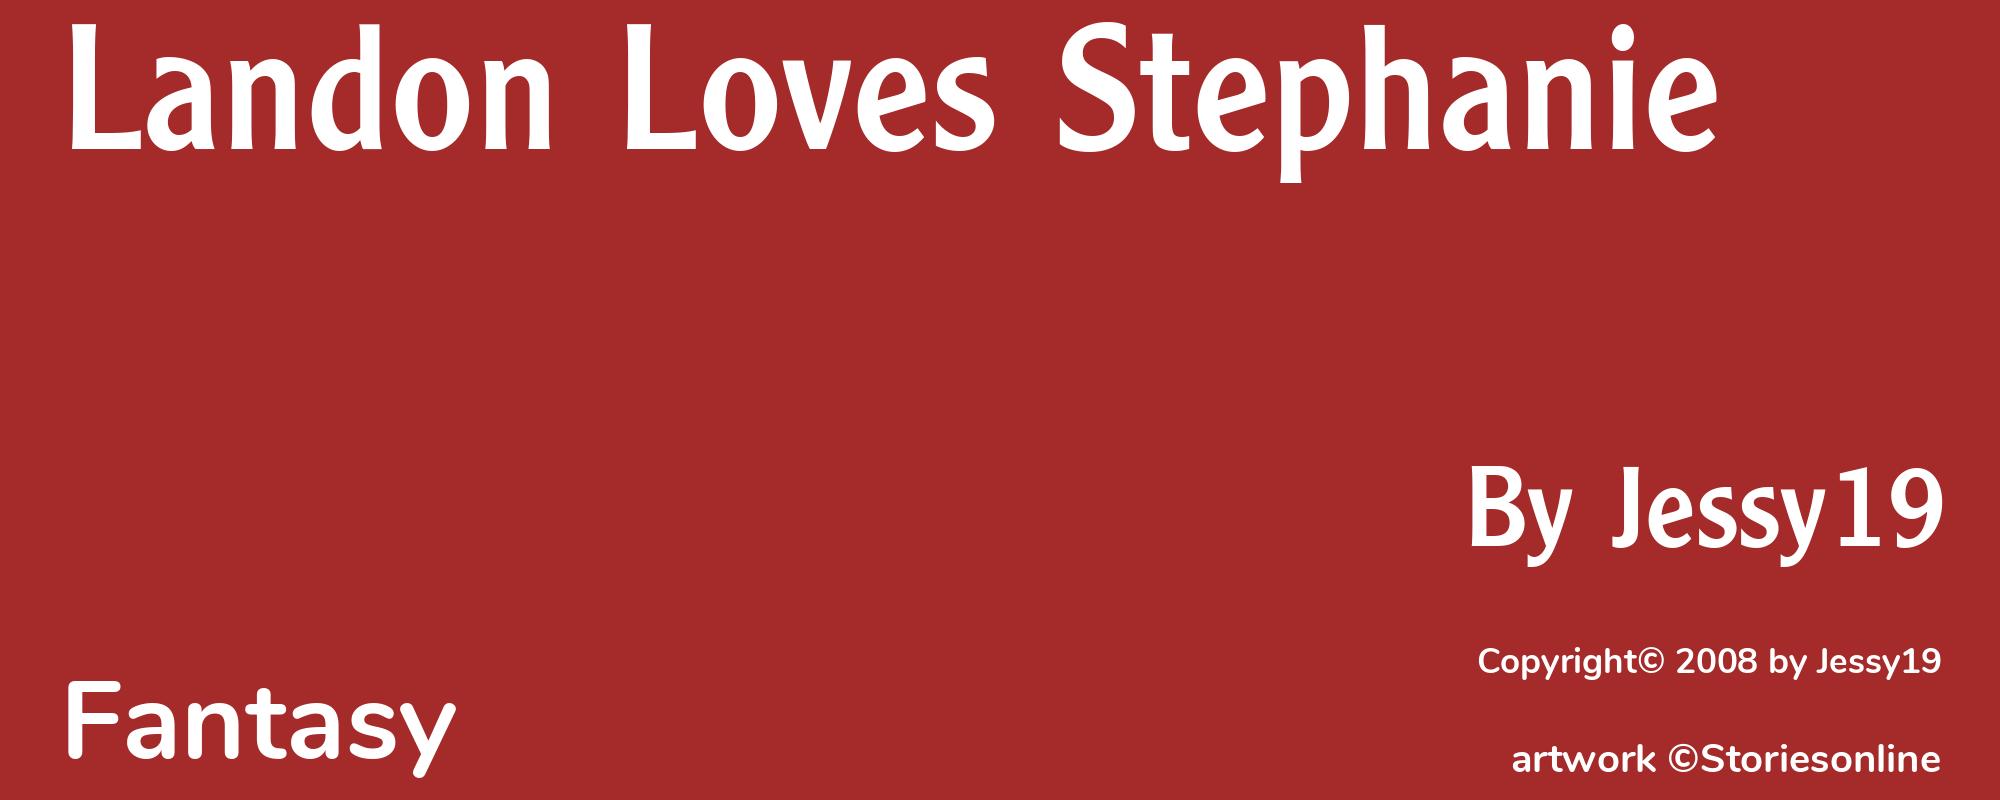 Landon Loves Stephanie - Cover